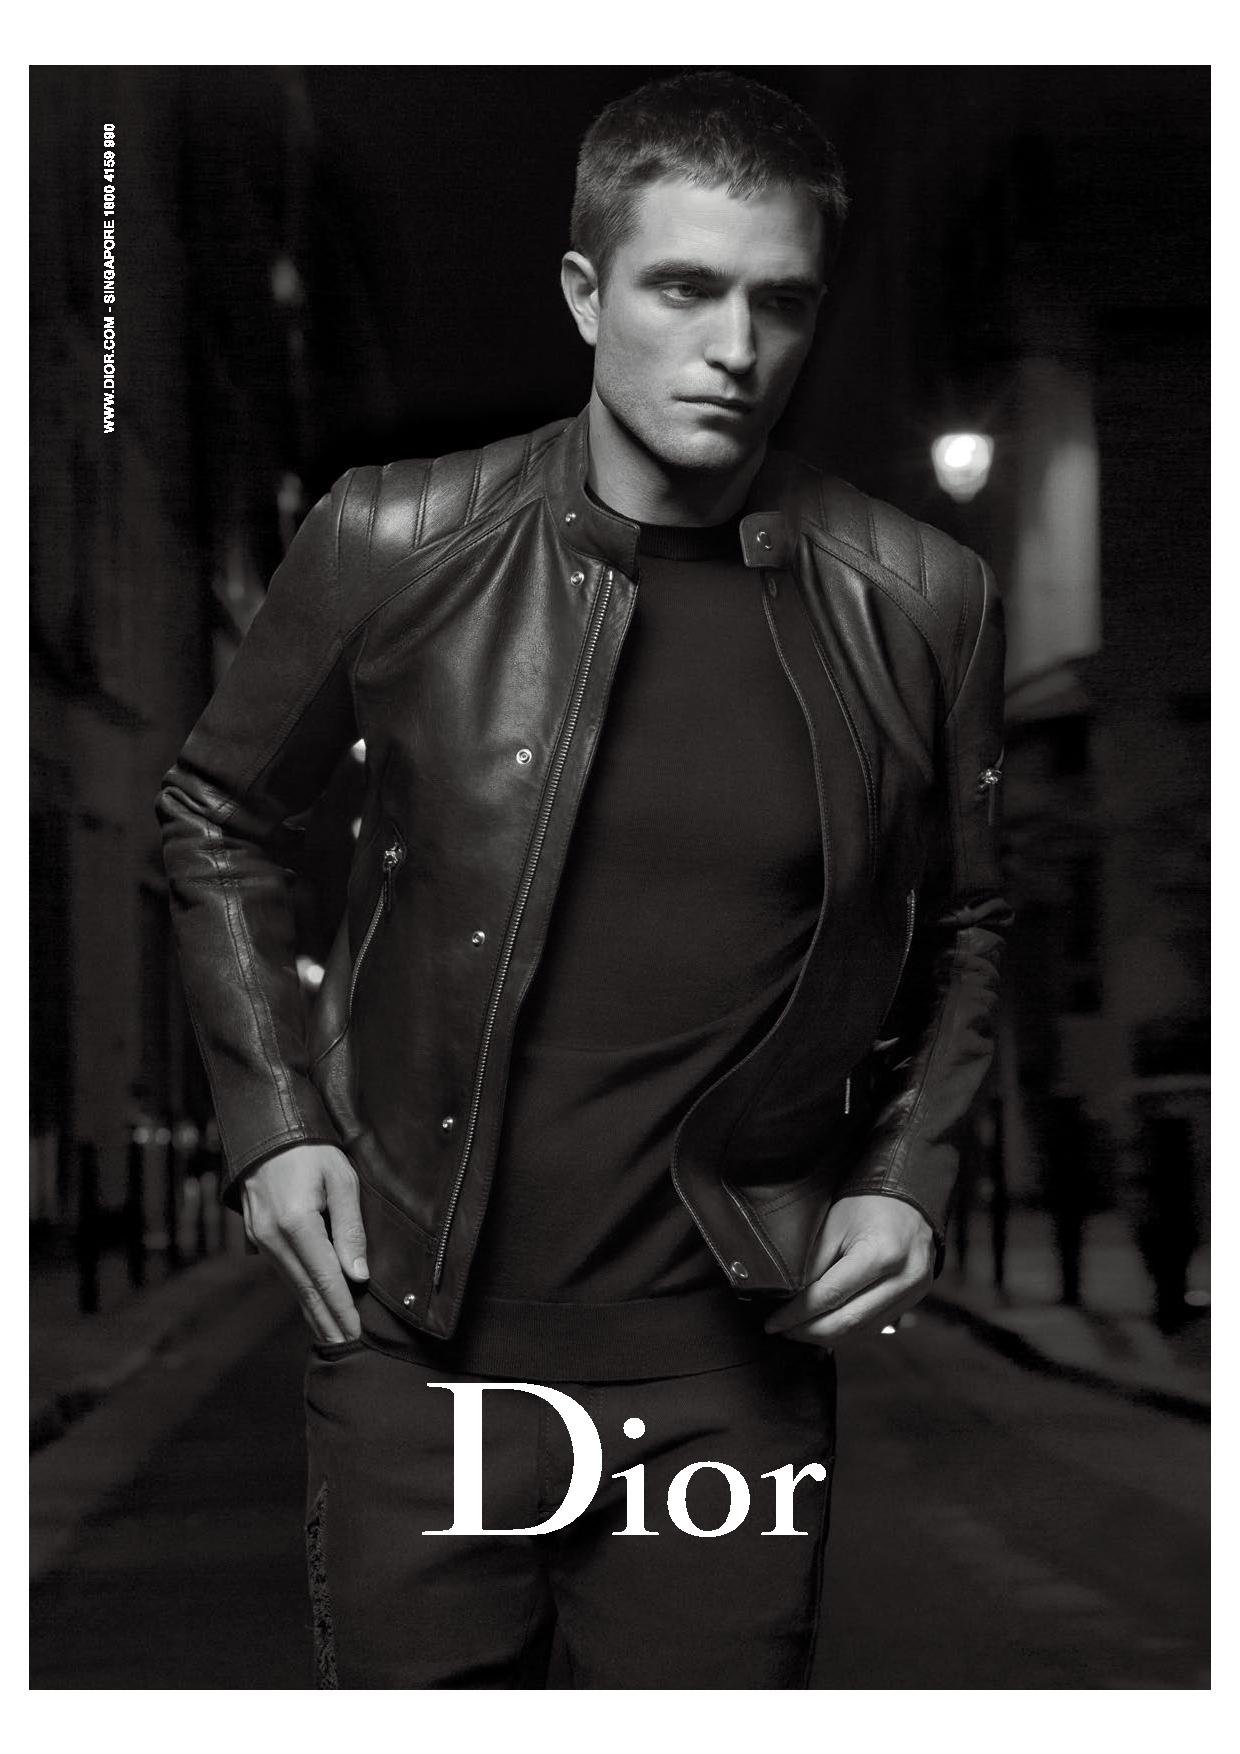 Robert Pattinson Australia » Blog Archive » HQ Robert Pattinson Dior Ad ...